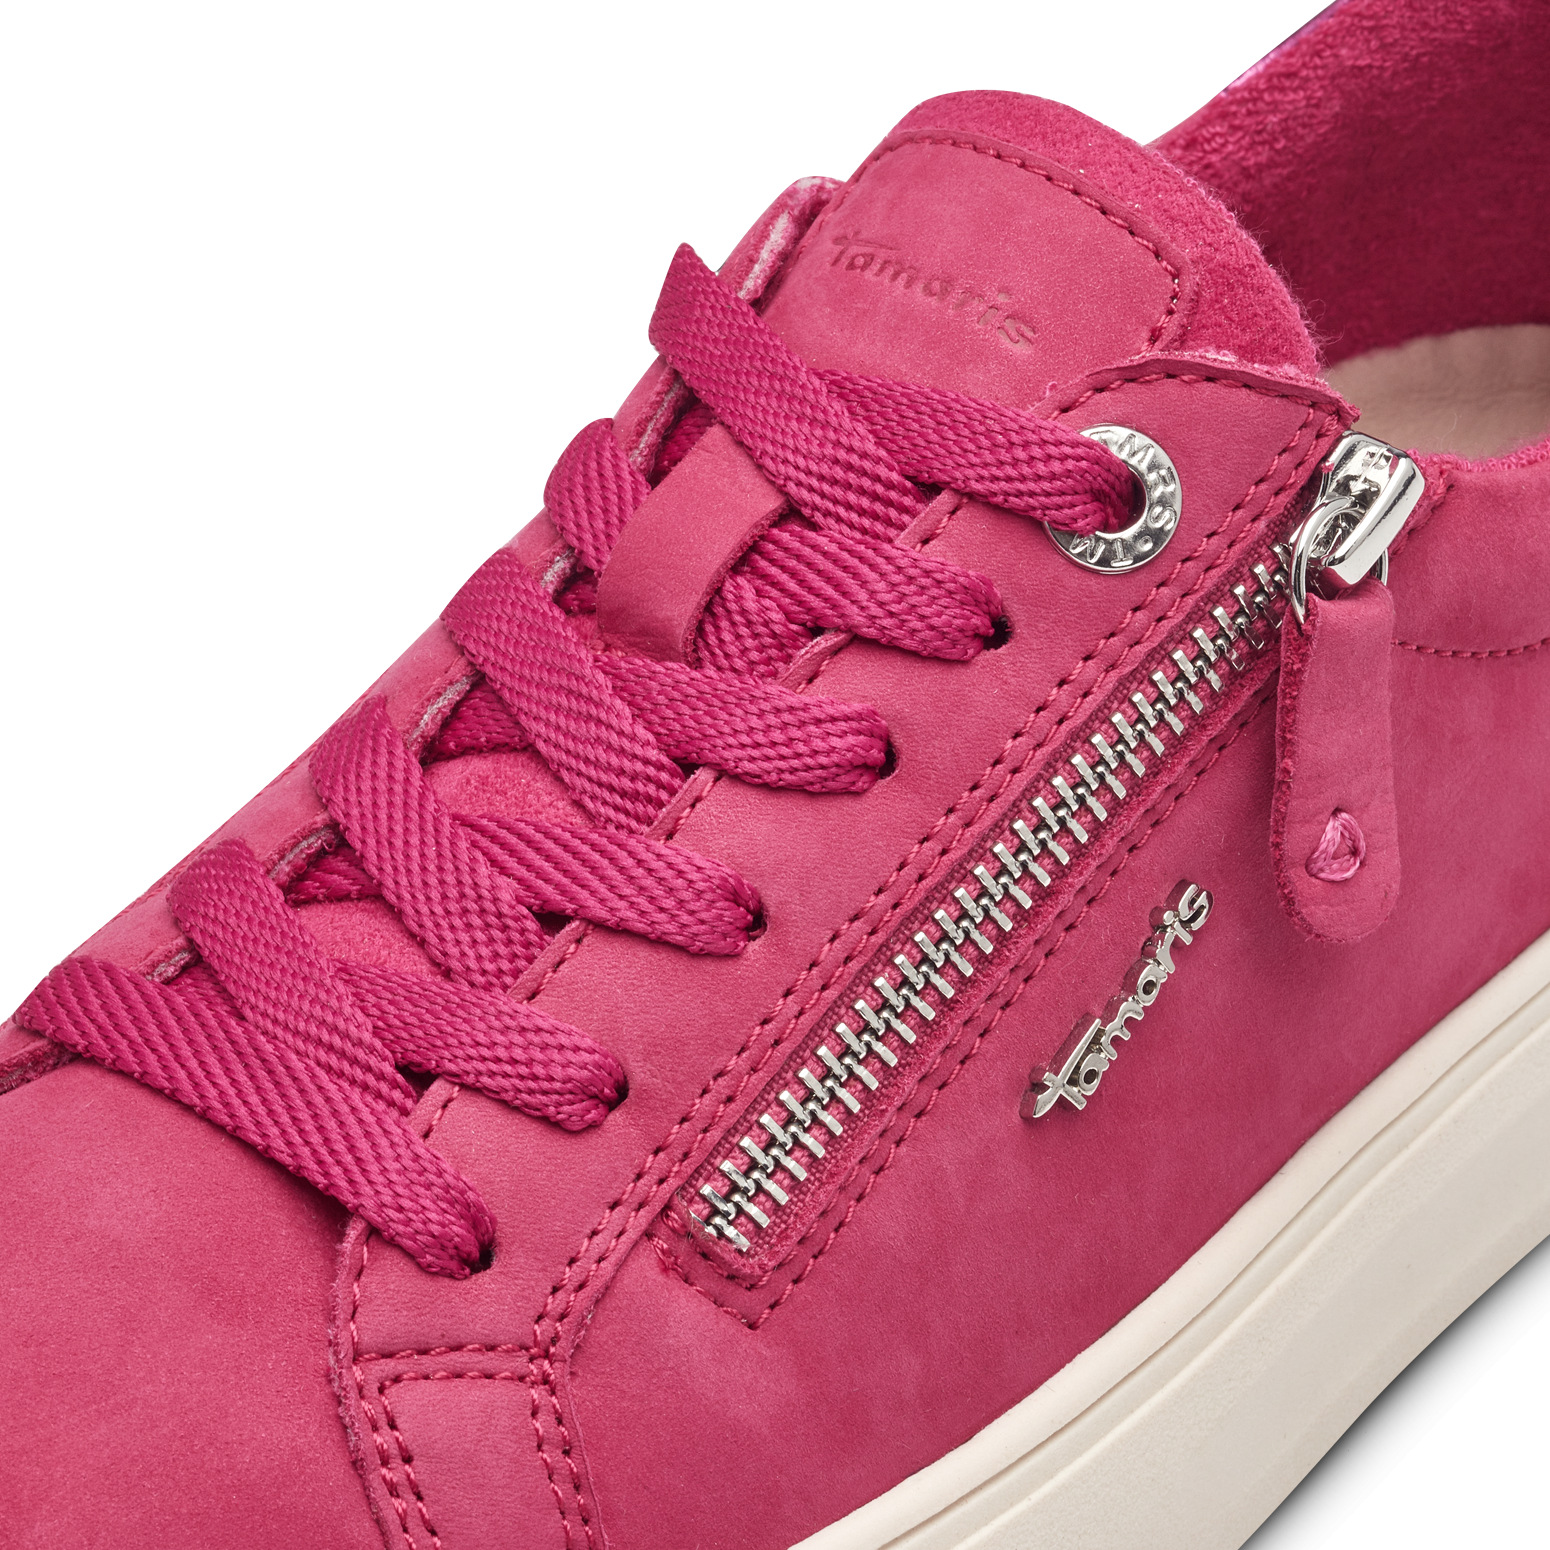 Tamaris Comfort Sneaker - Fuxia Leder/Textil